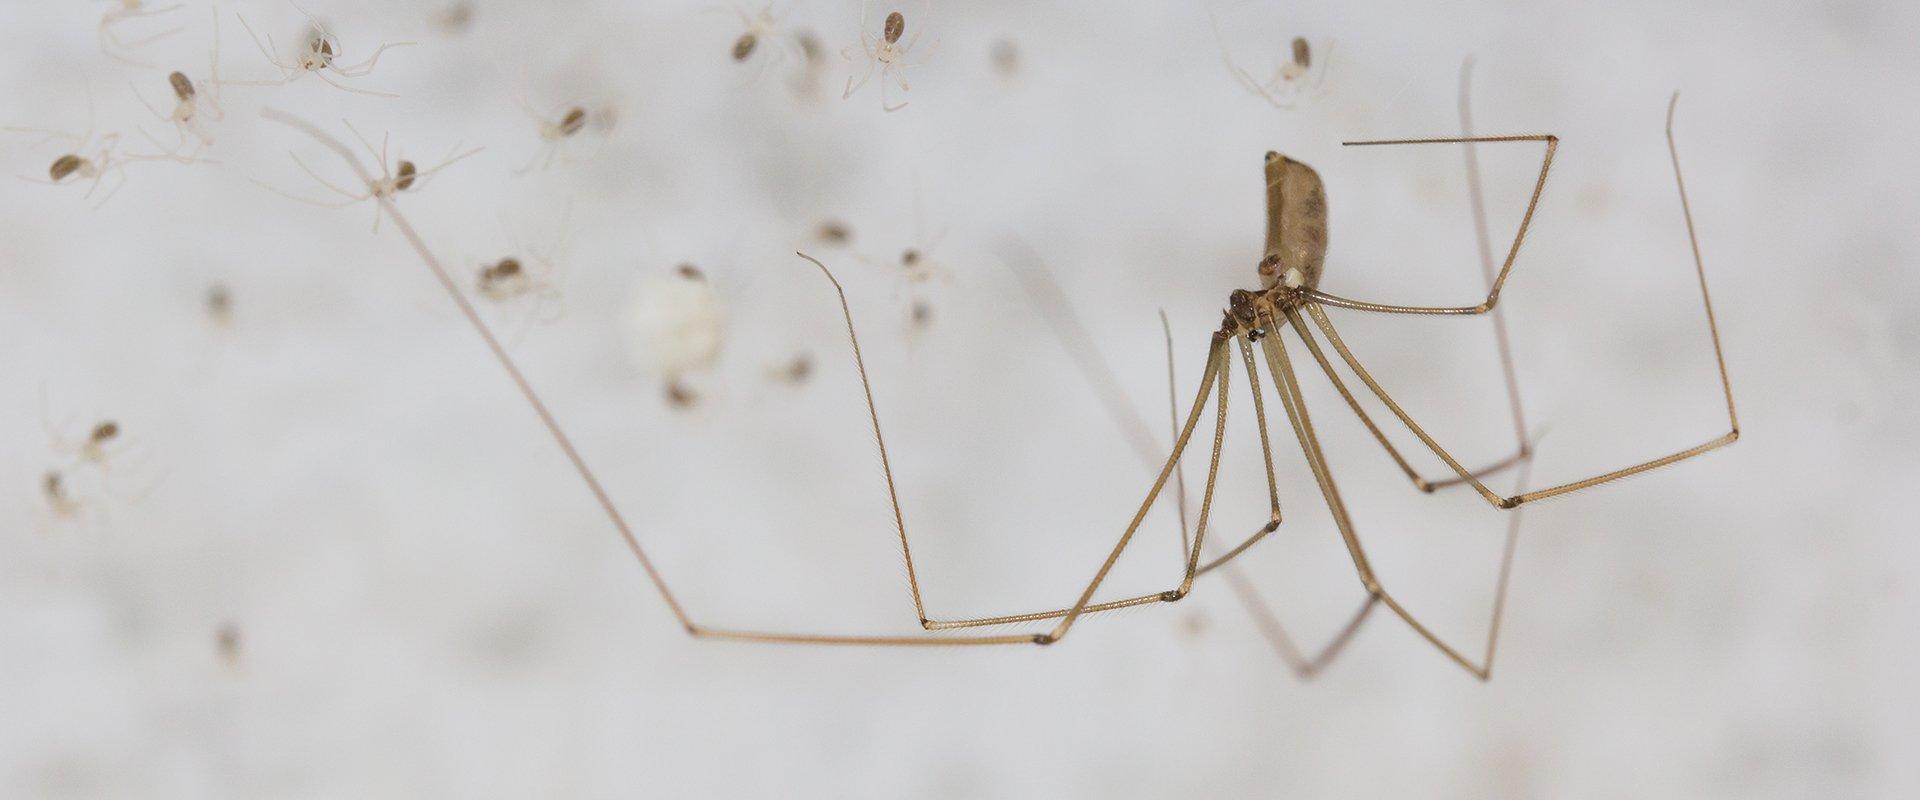 Pholcidae Cellar Spider